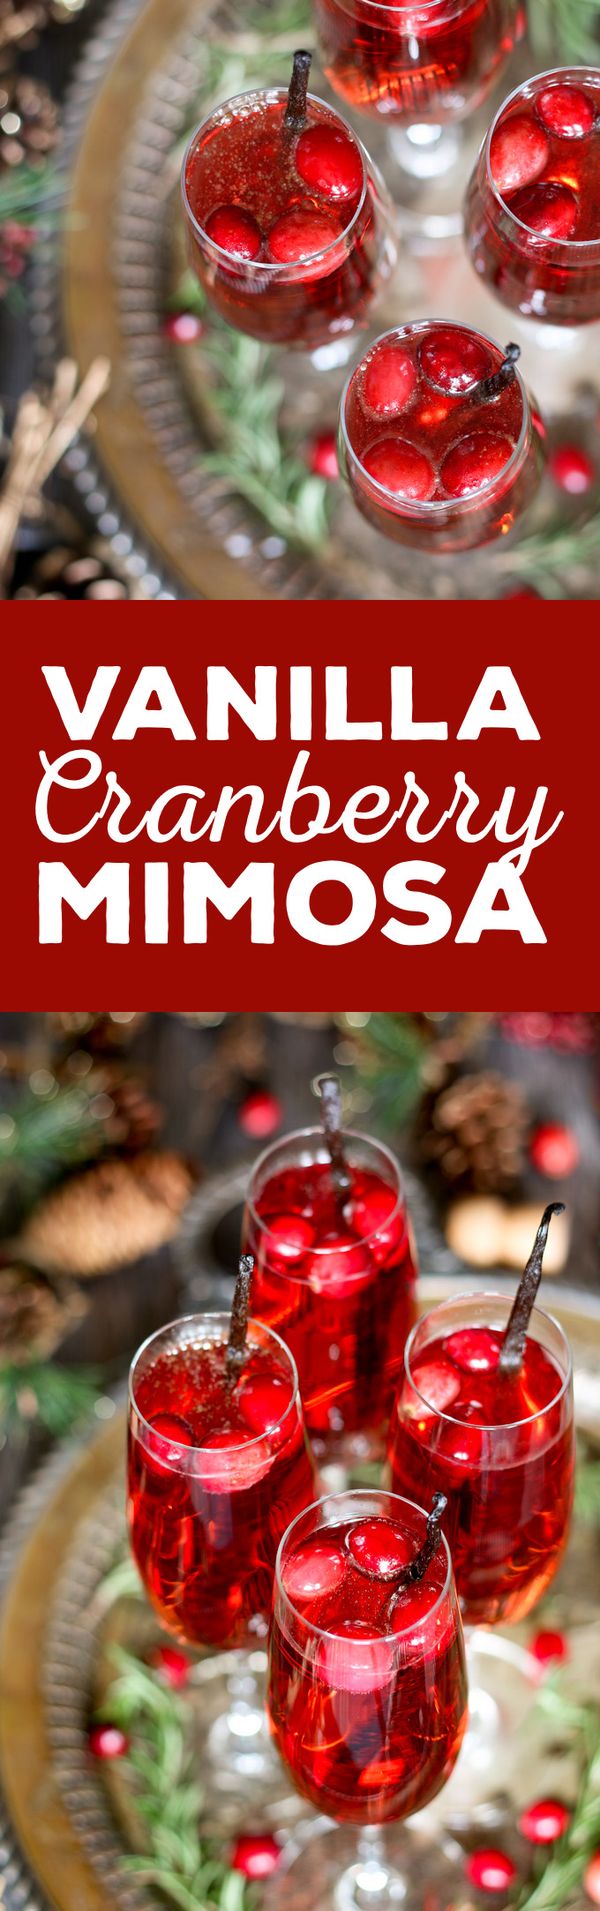 Vanilla Cranberry Mimosa